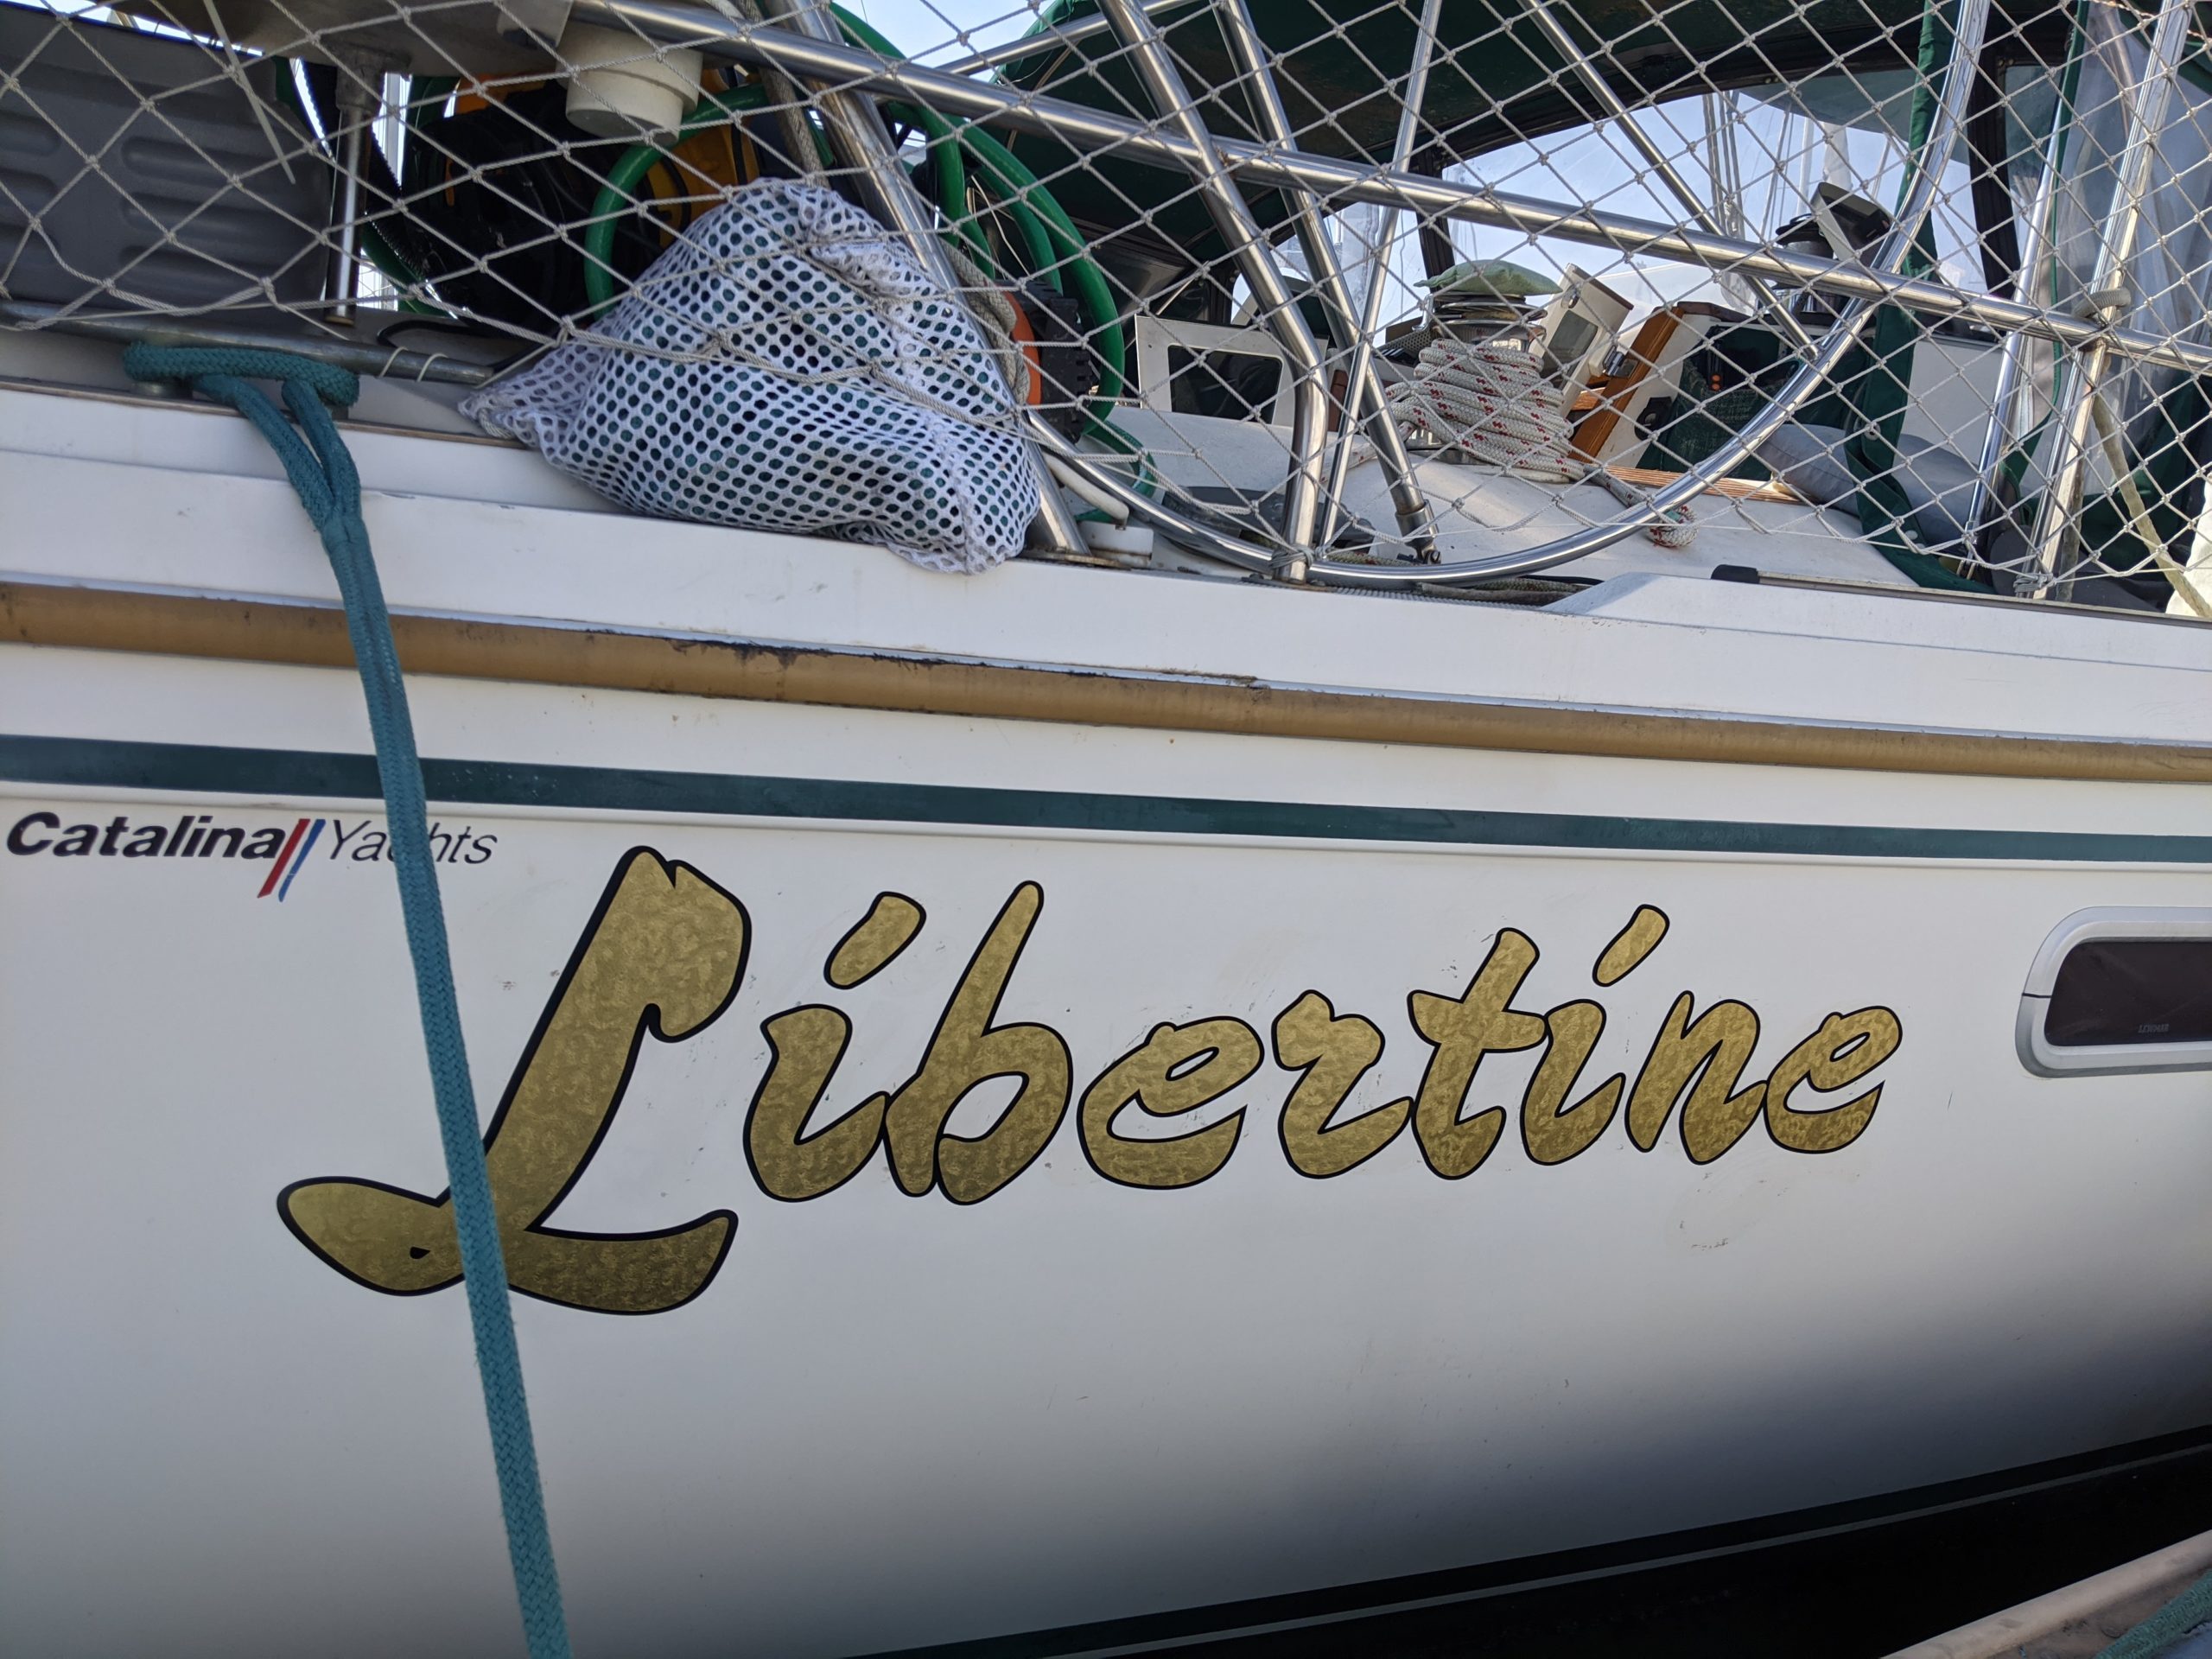 Libertine boat lettering